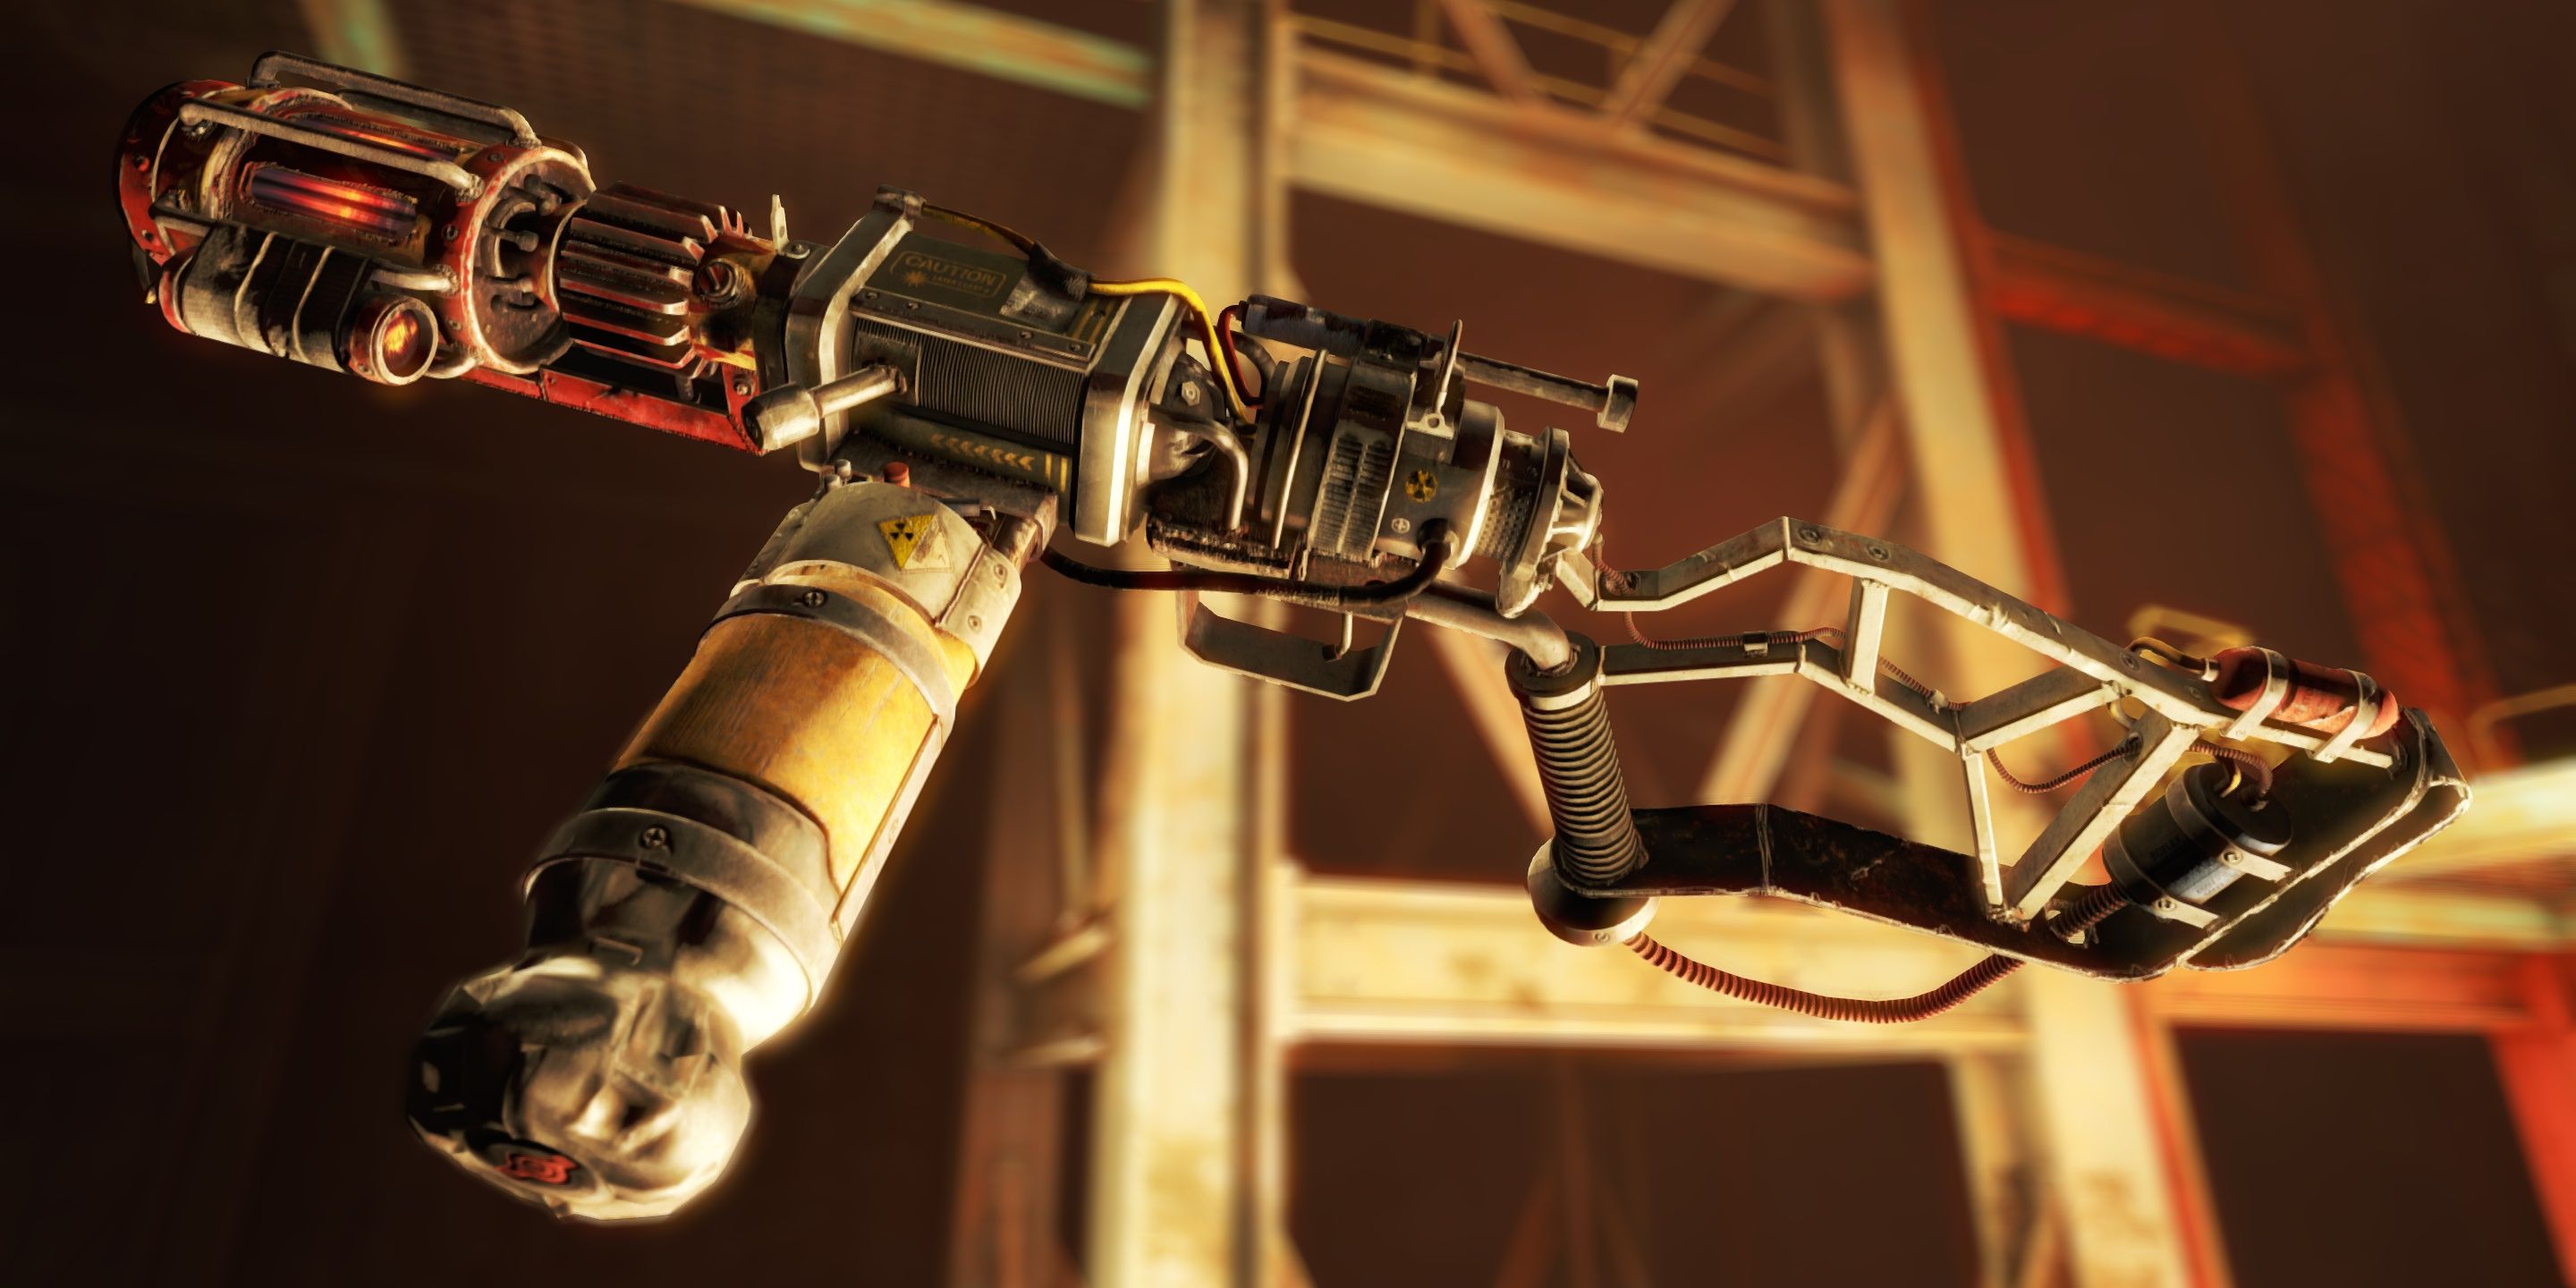 The Zap Gun - A Makeshift Laser Weapon mod for Fallout 4